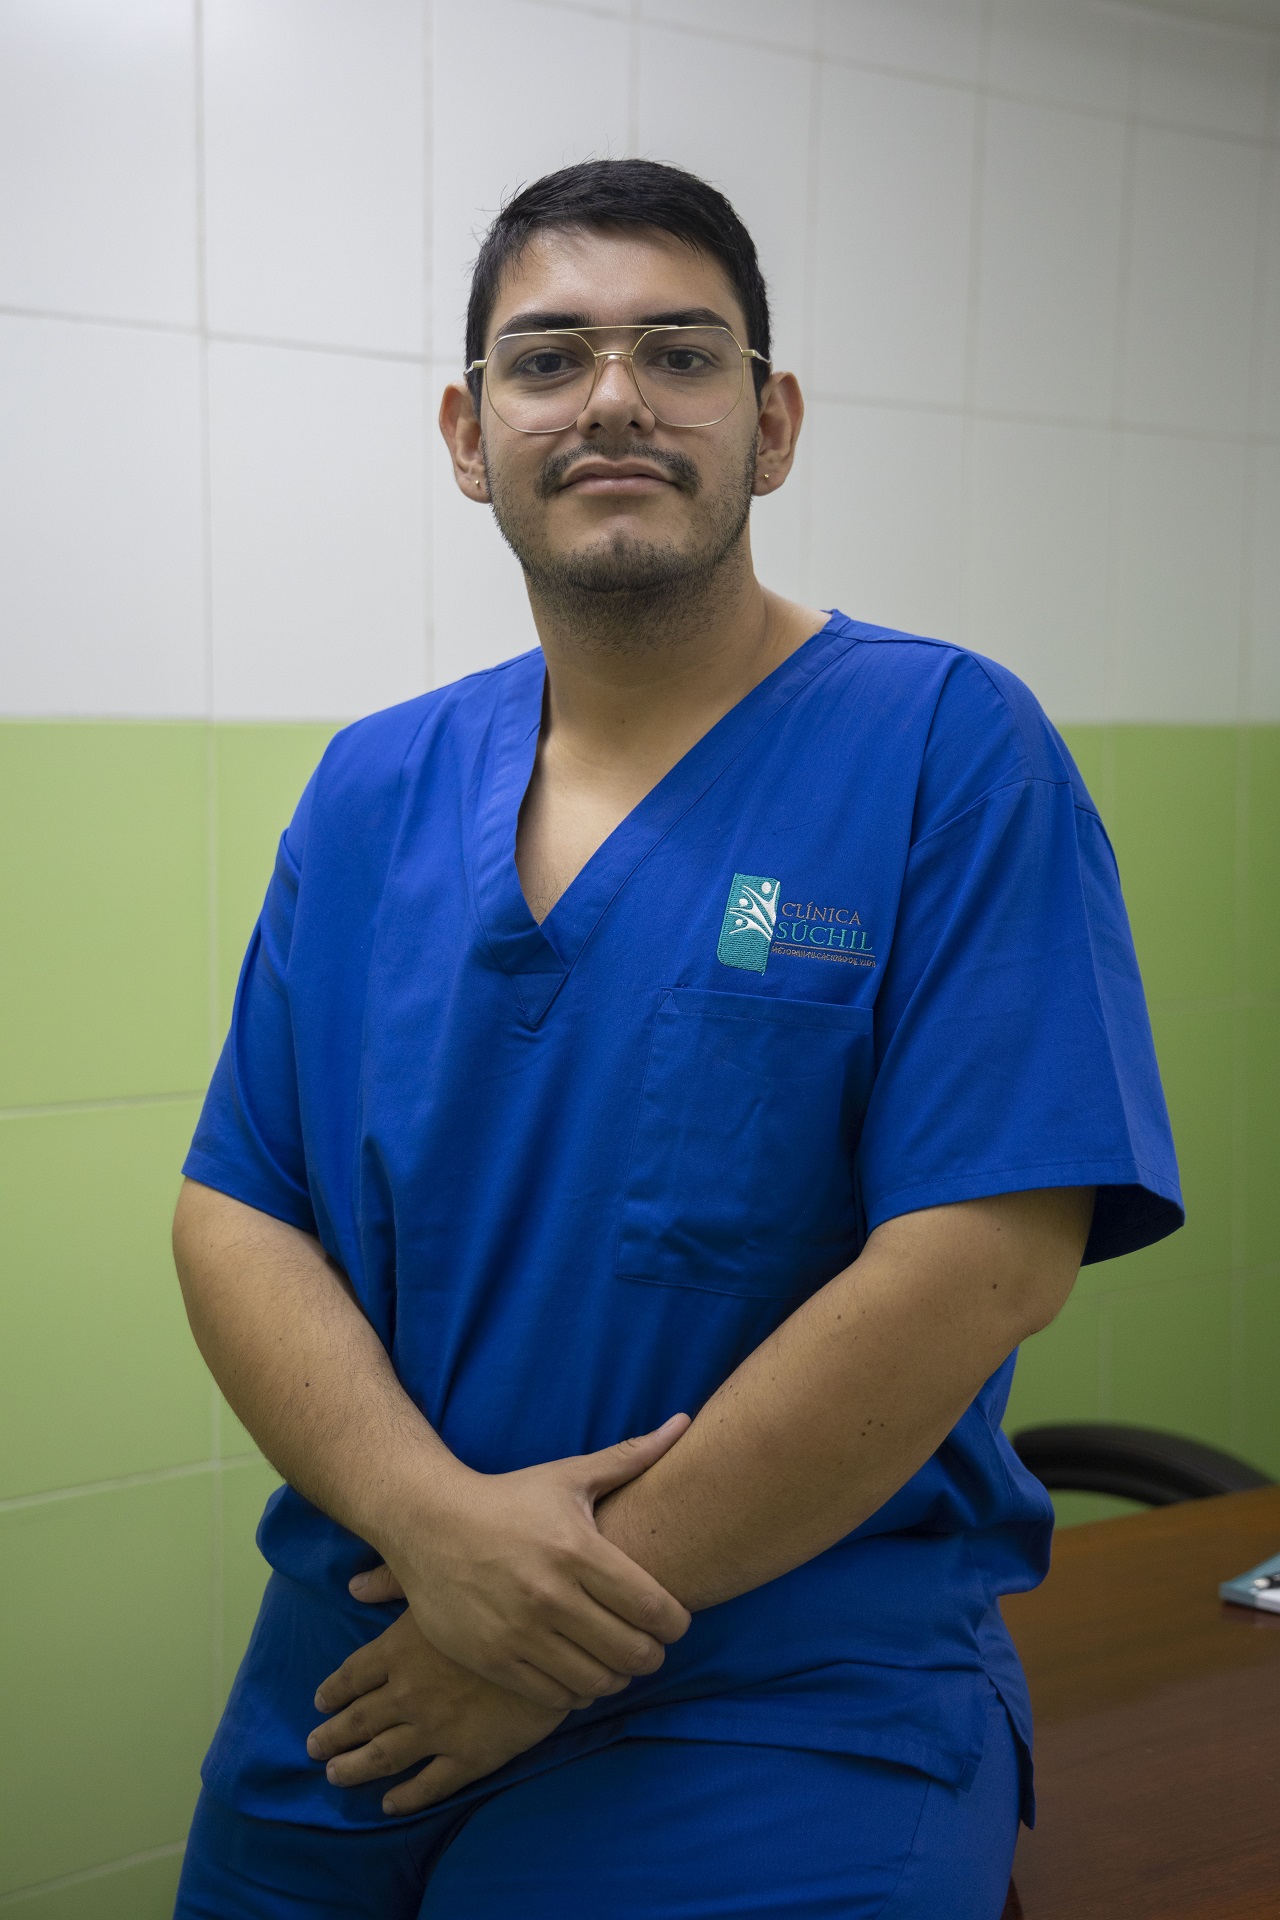 Dr. Marcus Súchil García